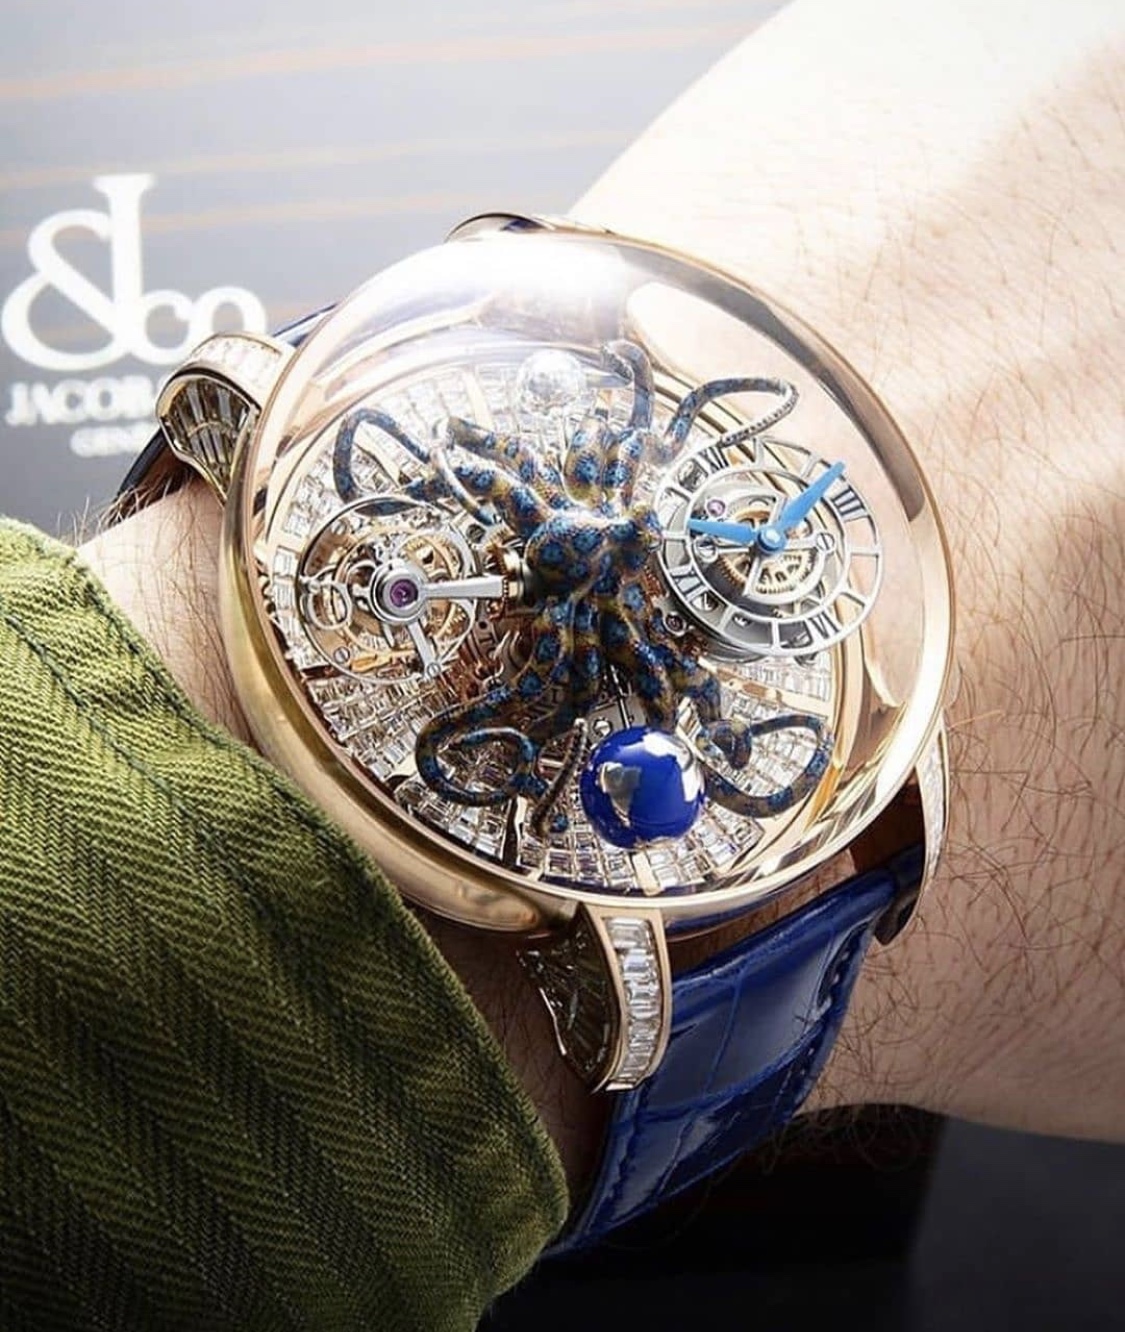 OCTOPUS KRAKEN watch ,To recreate the spirit of legendary watches